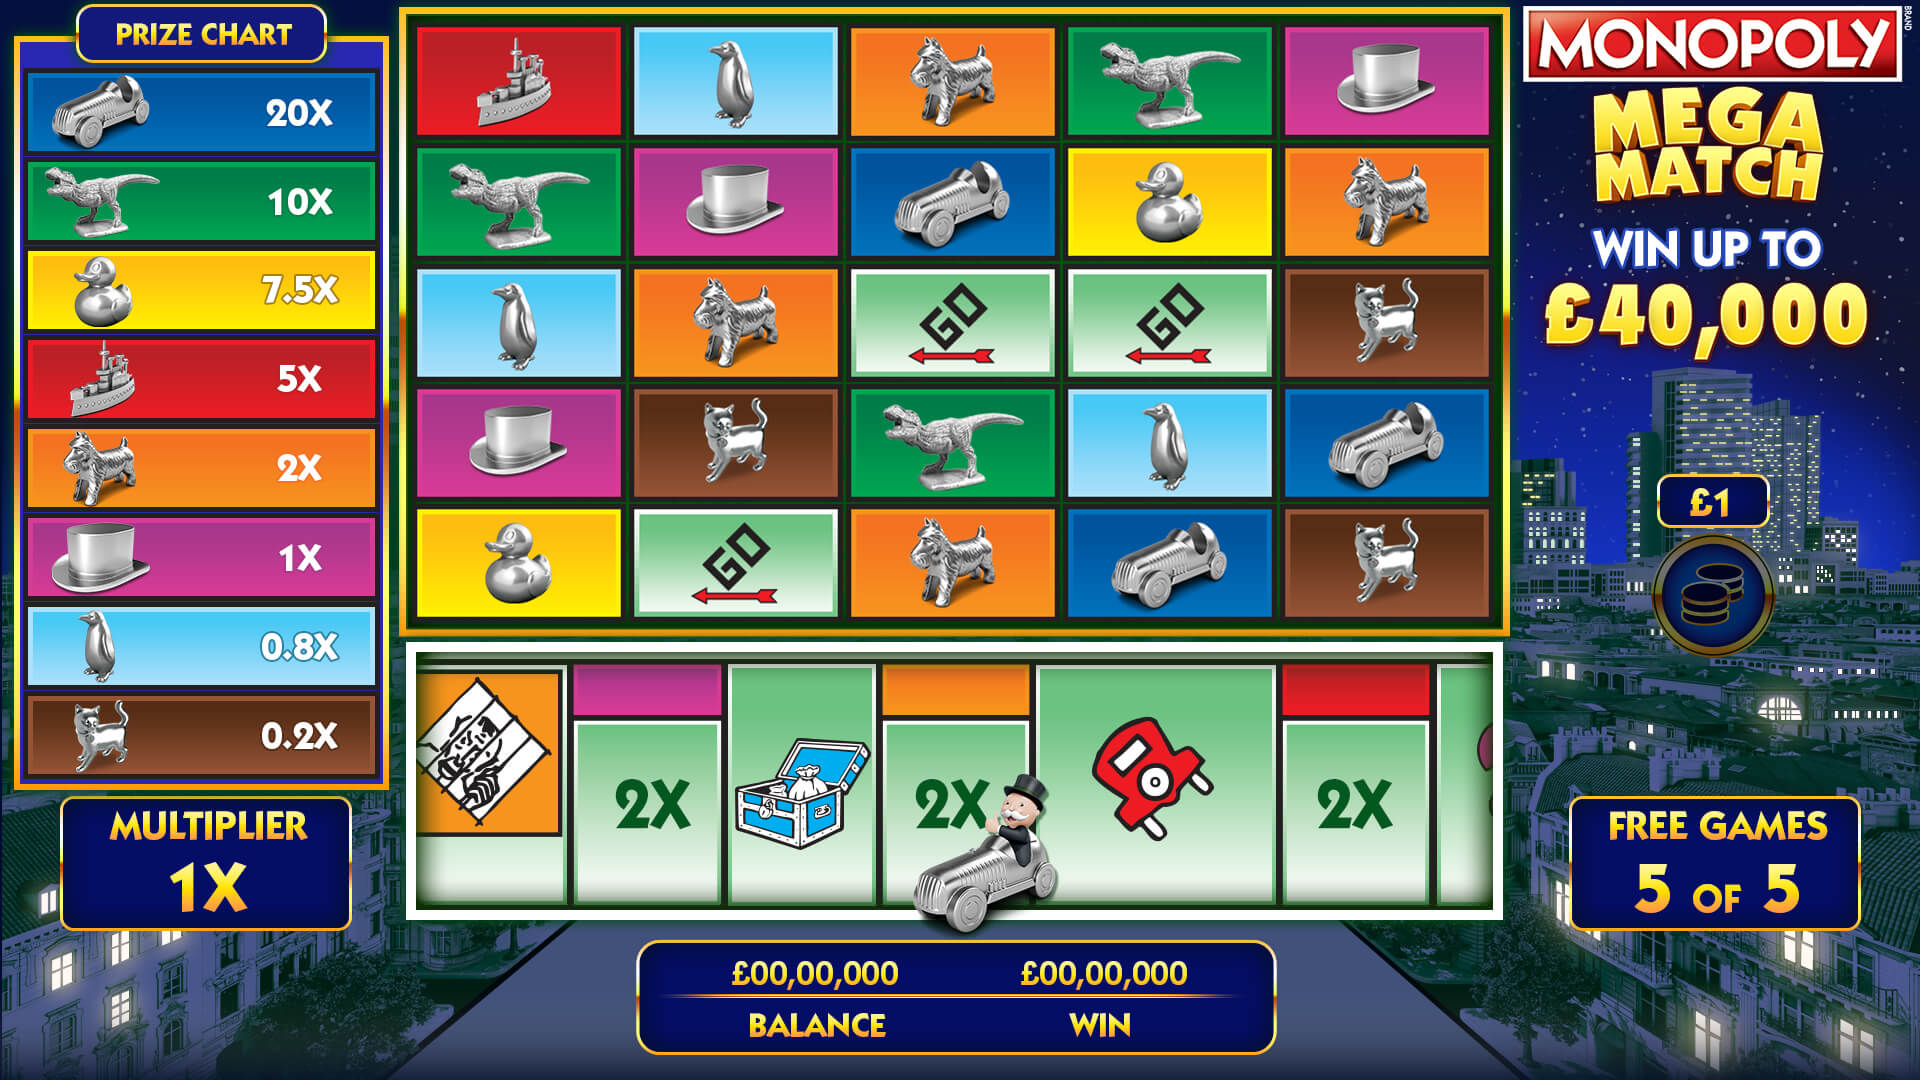 Monopoly Mega Match slot